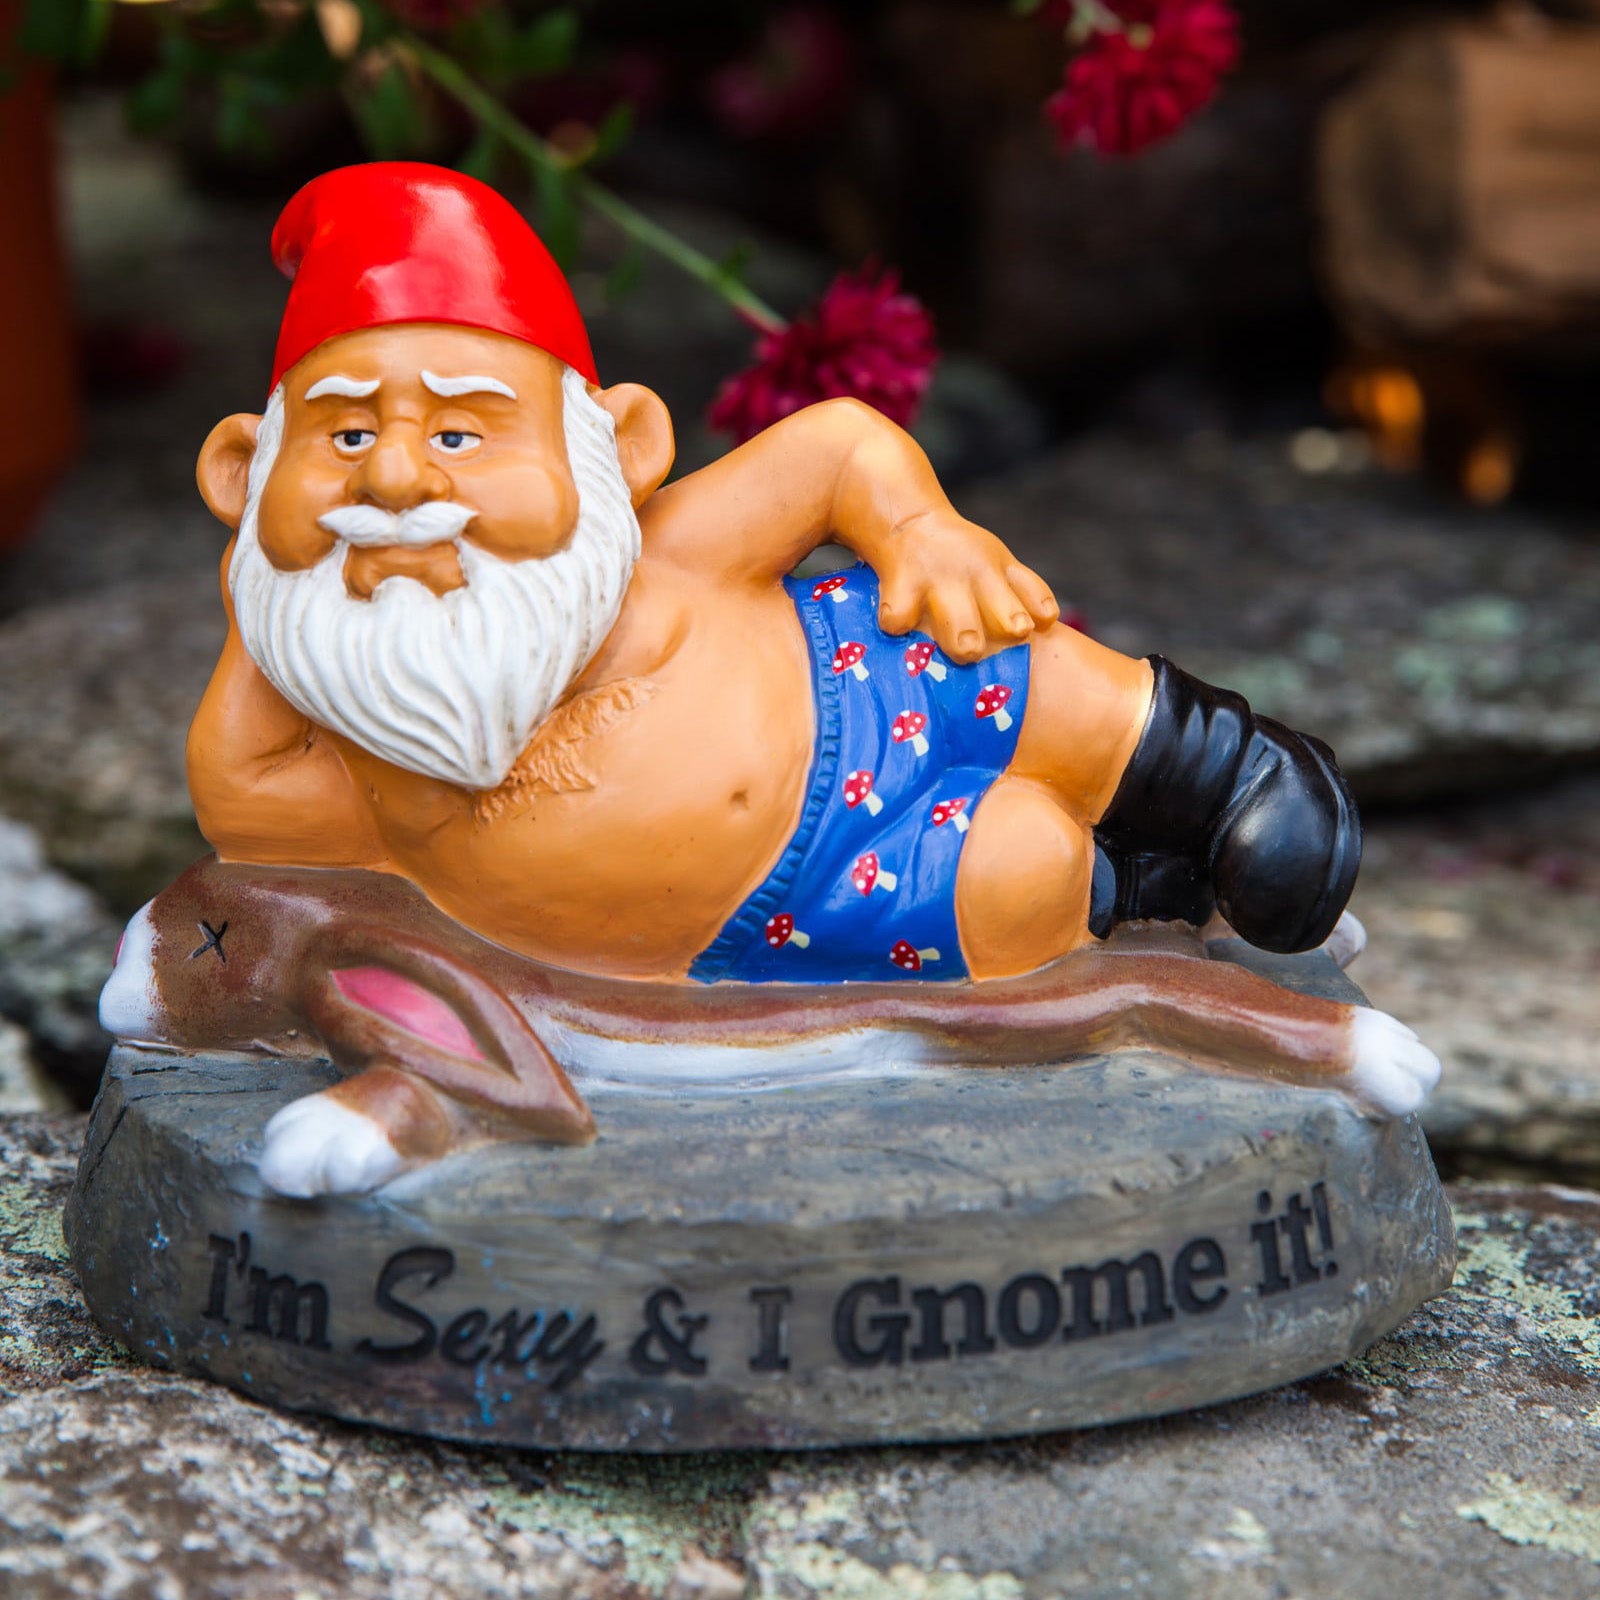 The Sexy and I Gnome It Garden Gnome